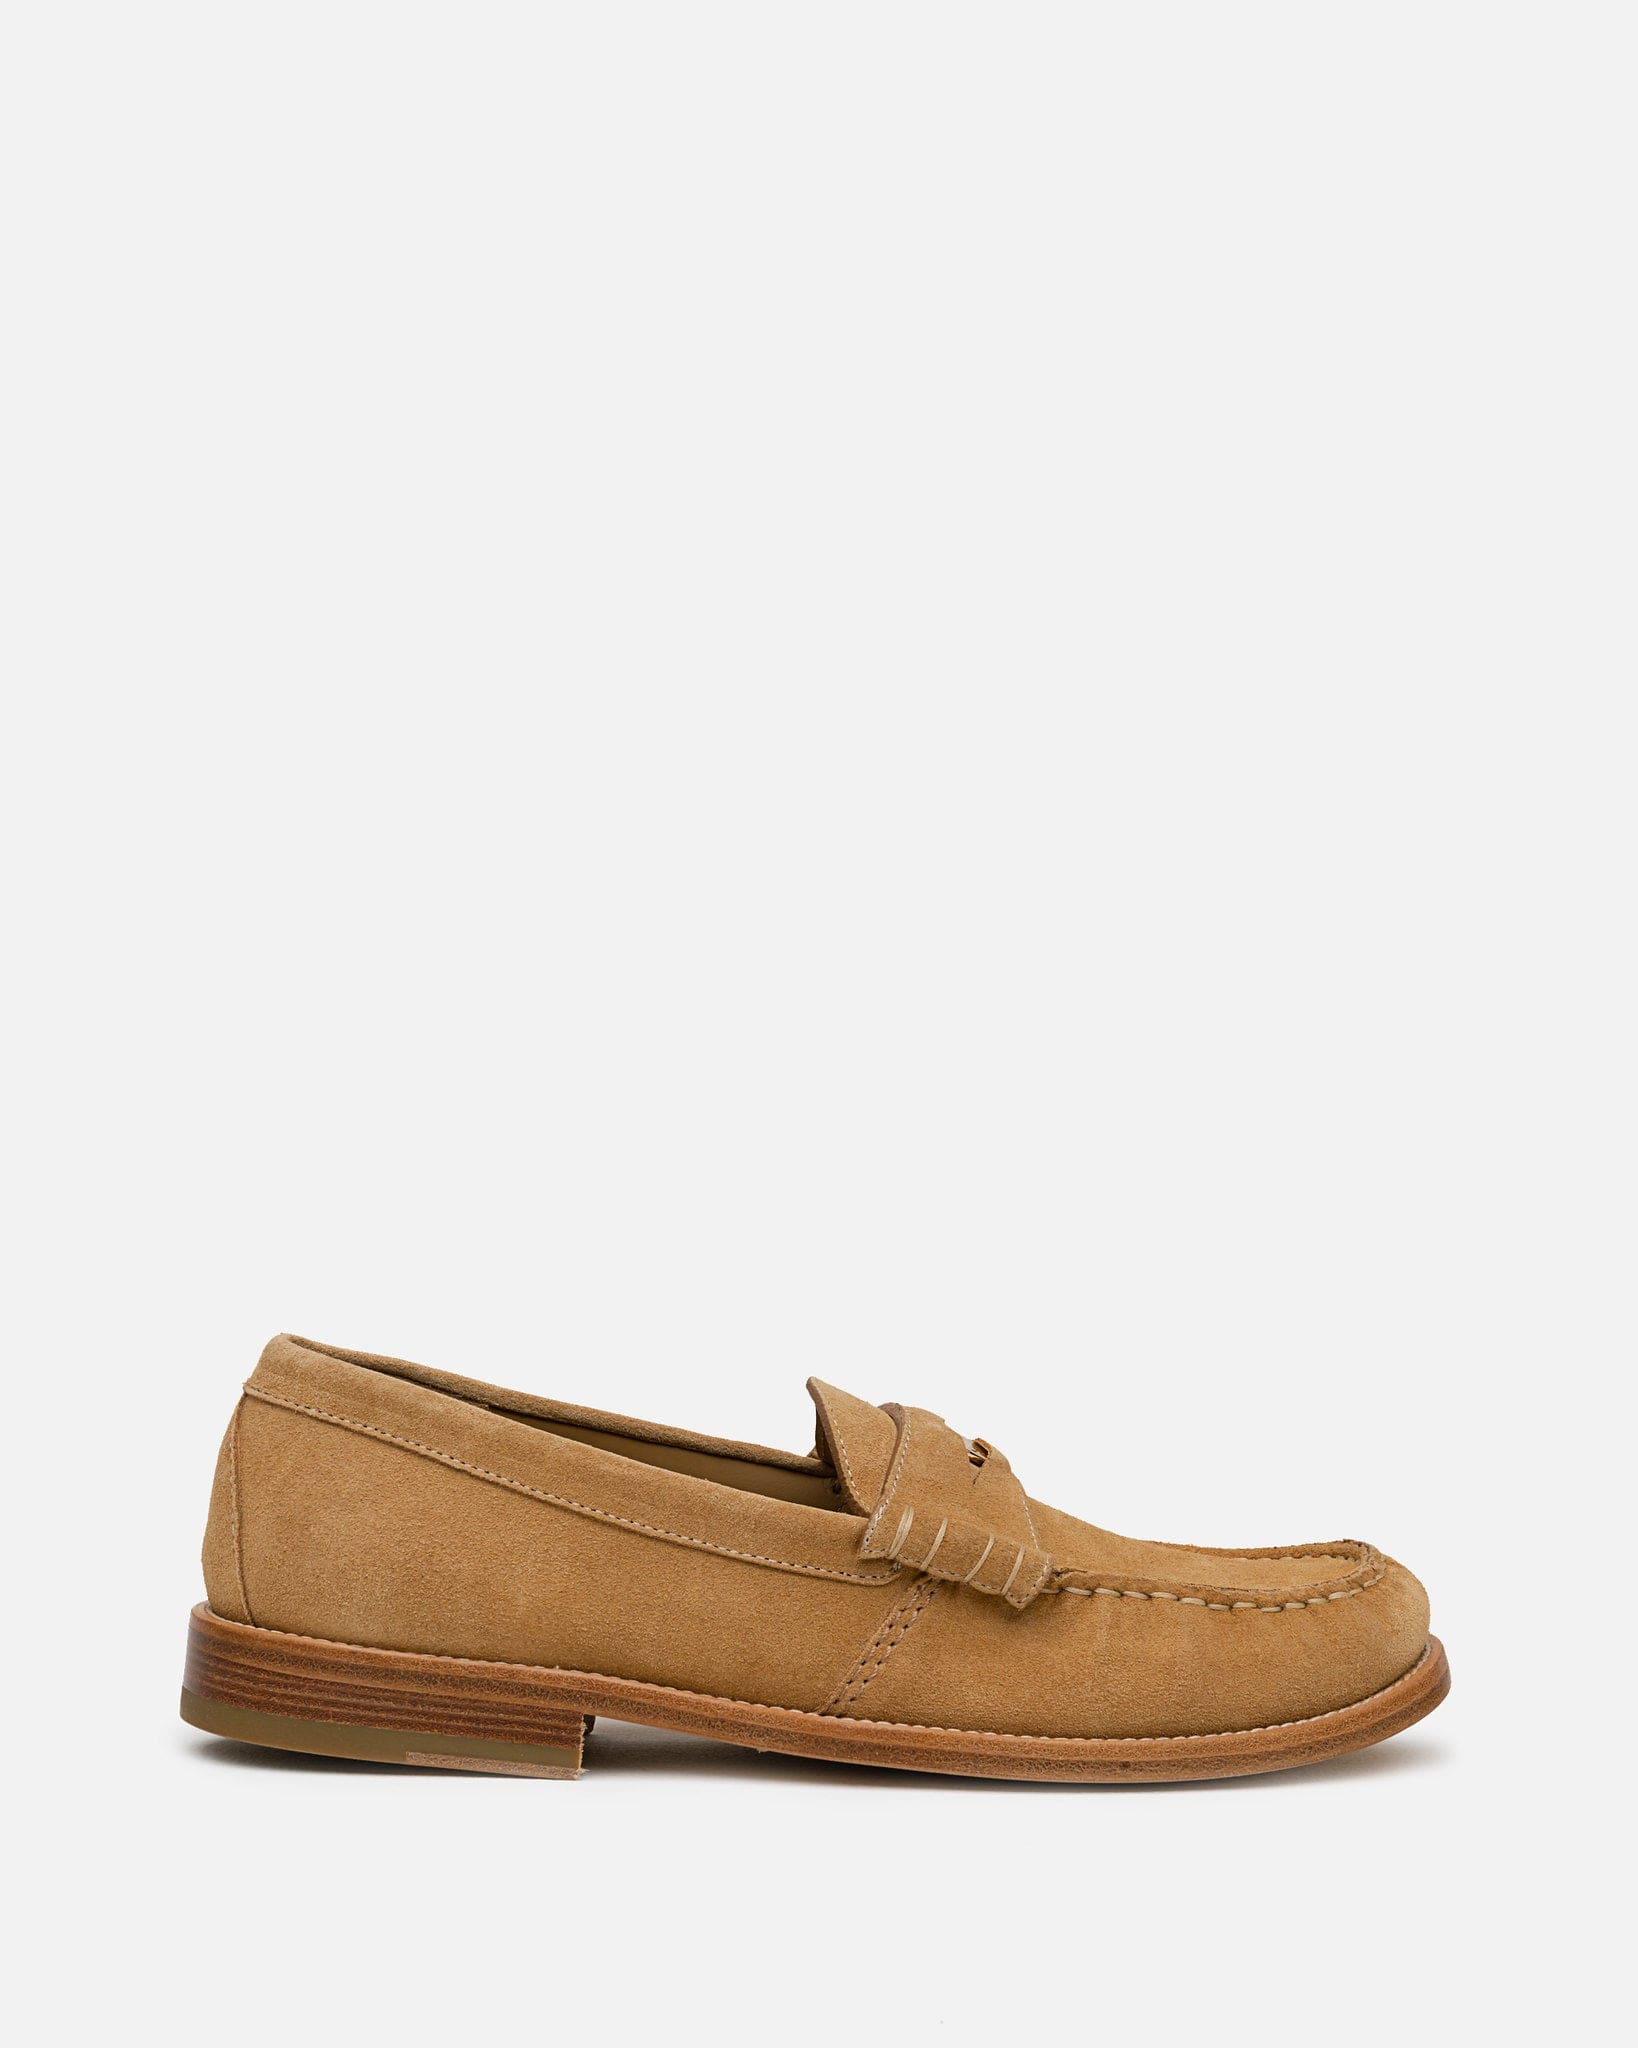 Rhude Men's Shoes Loafer in Tan